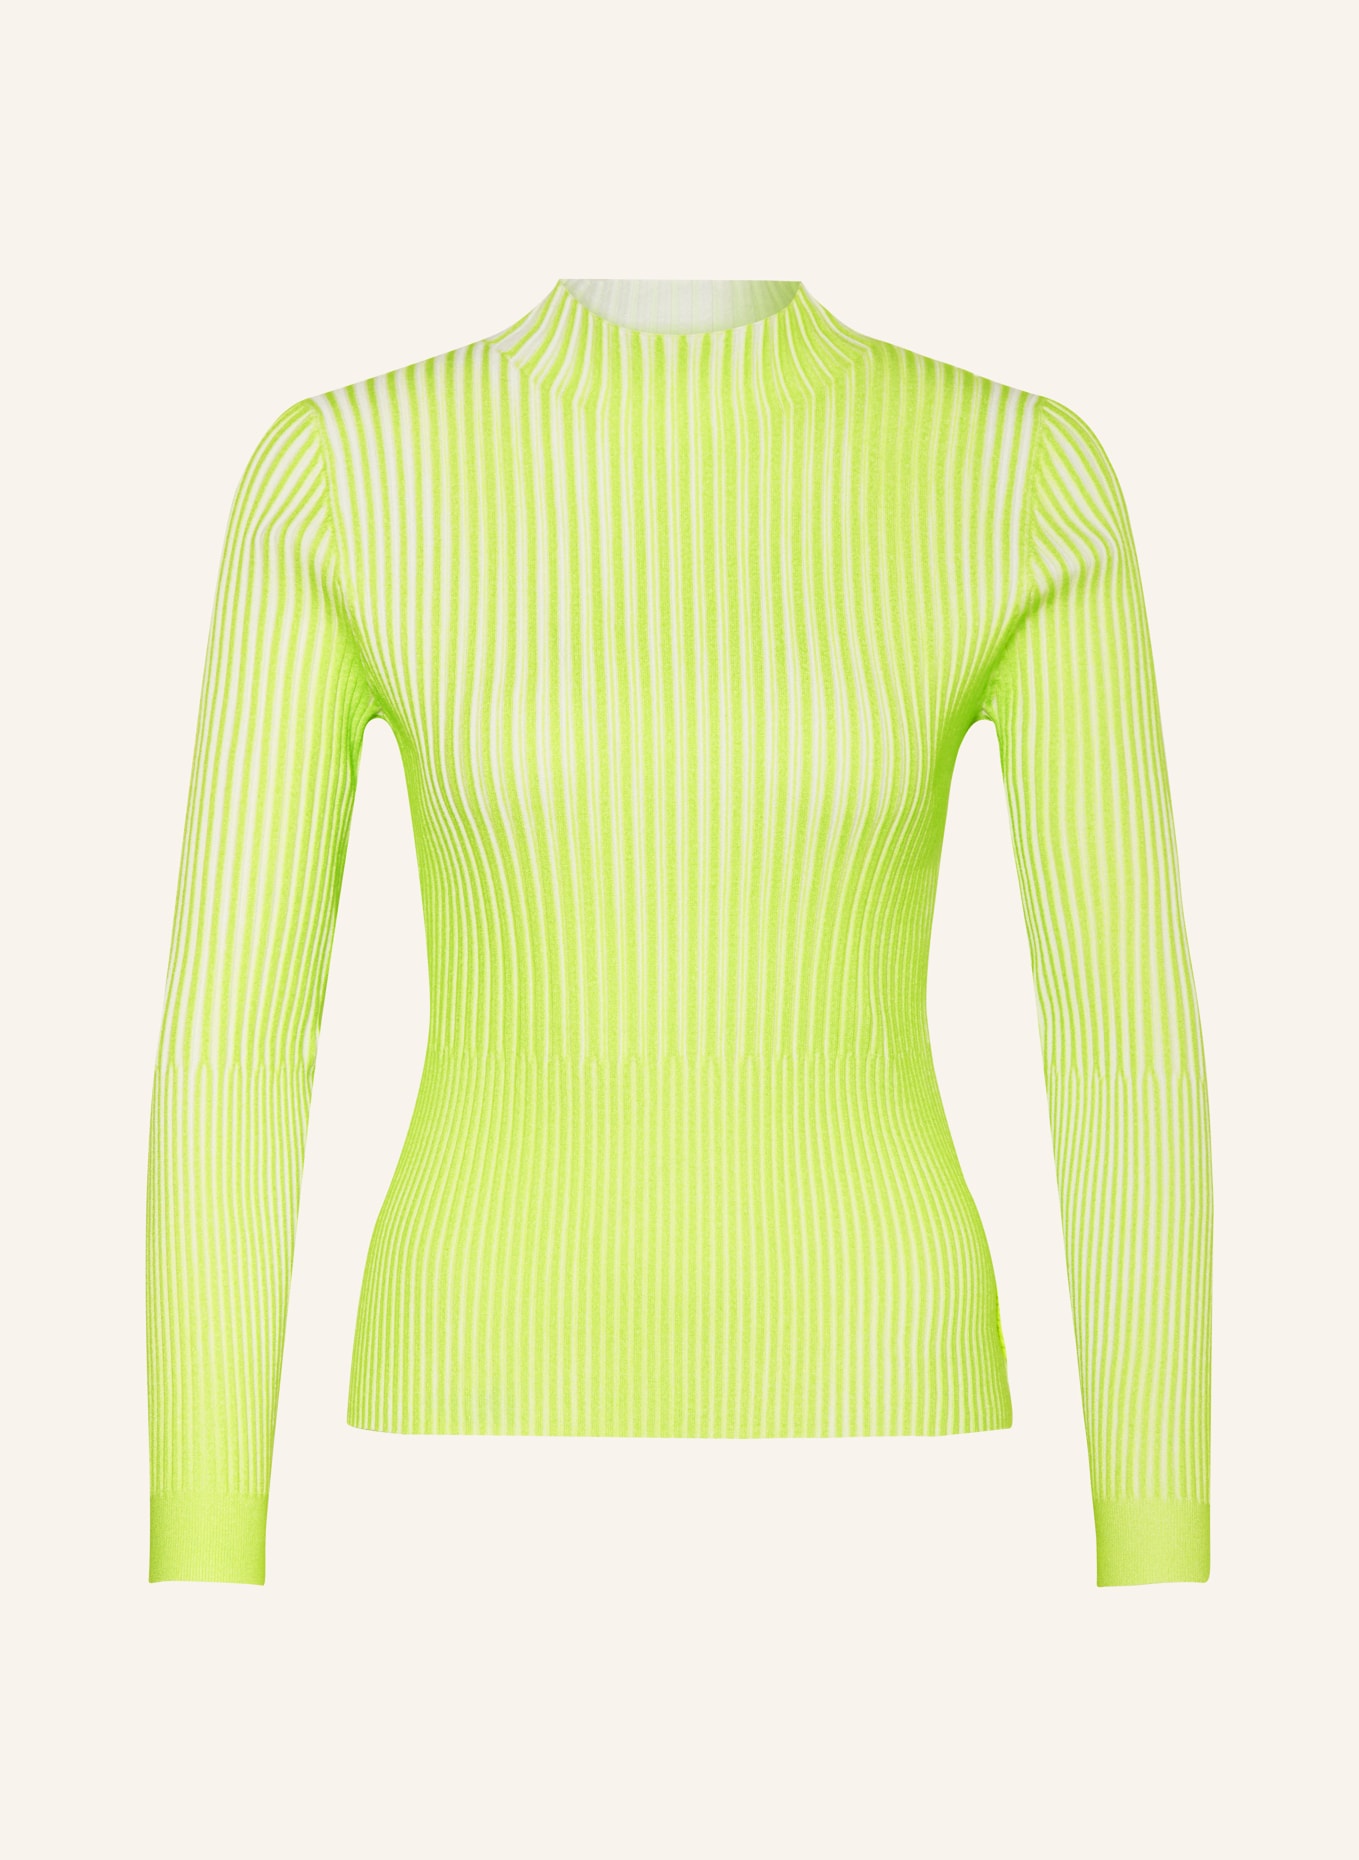 ULLI EHRLICH SPORTALM Pullover, Farbe: NEONGRÜN/ ECRU (Bild 1)